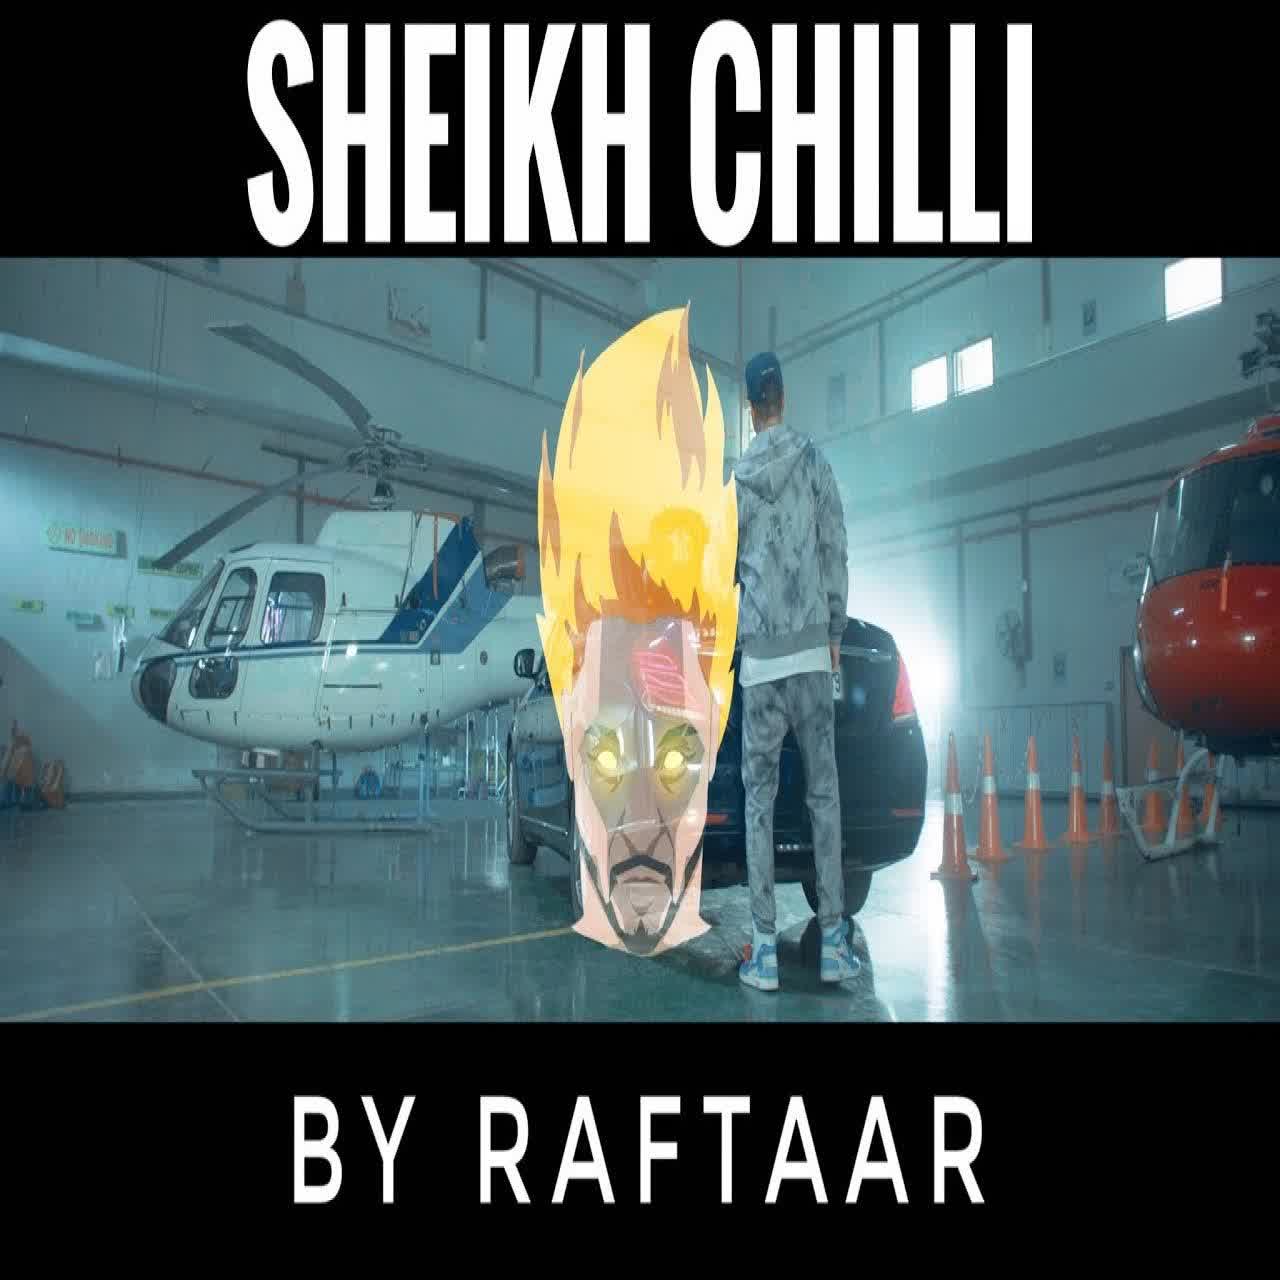 Sheikh Chilli Raftaar mp3 song